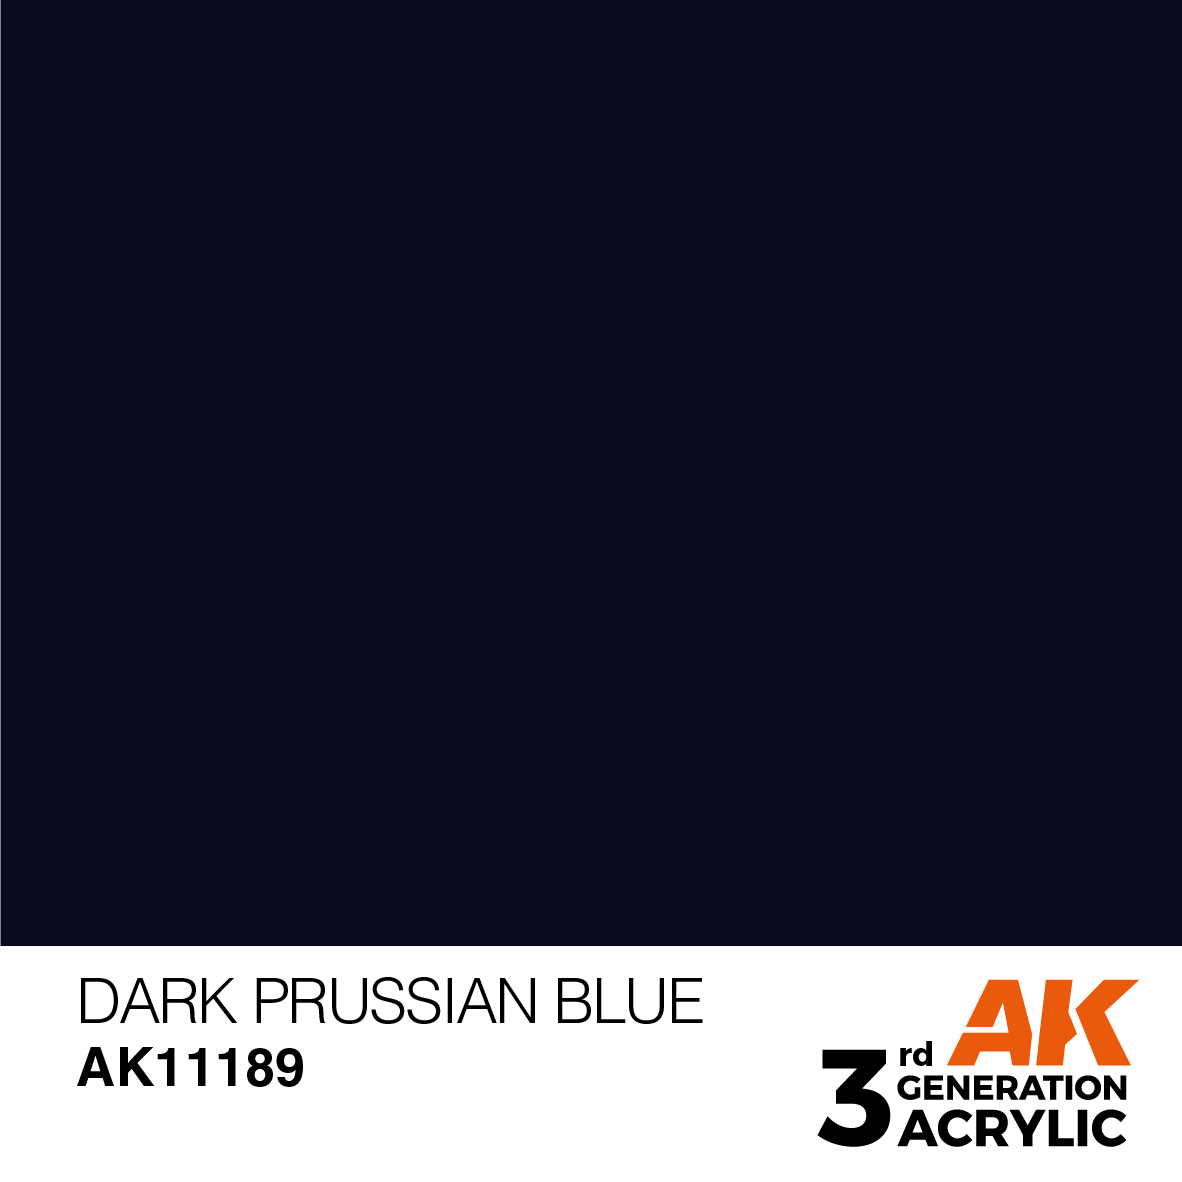 DARK PRUSSIAN BLUE – STANDARD